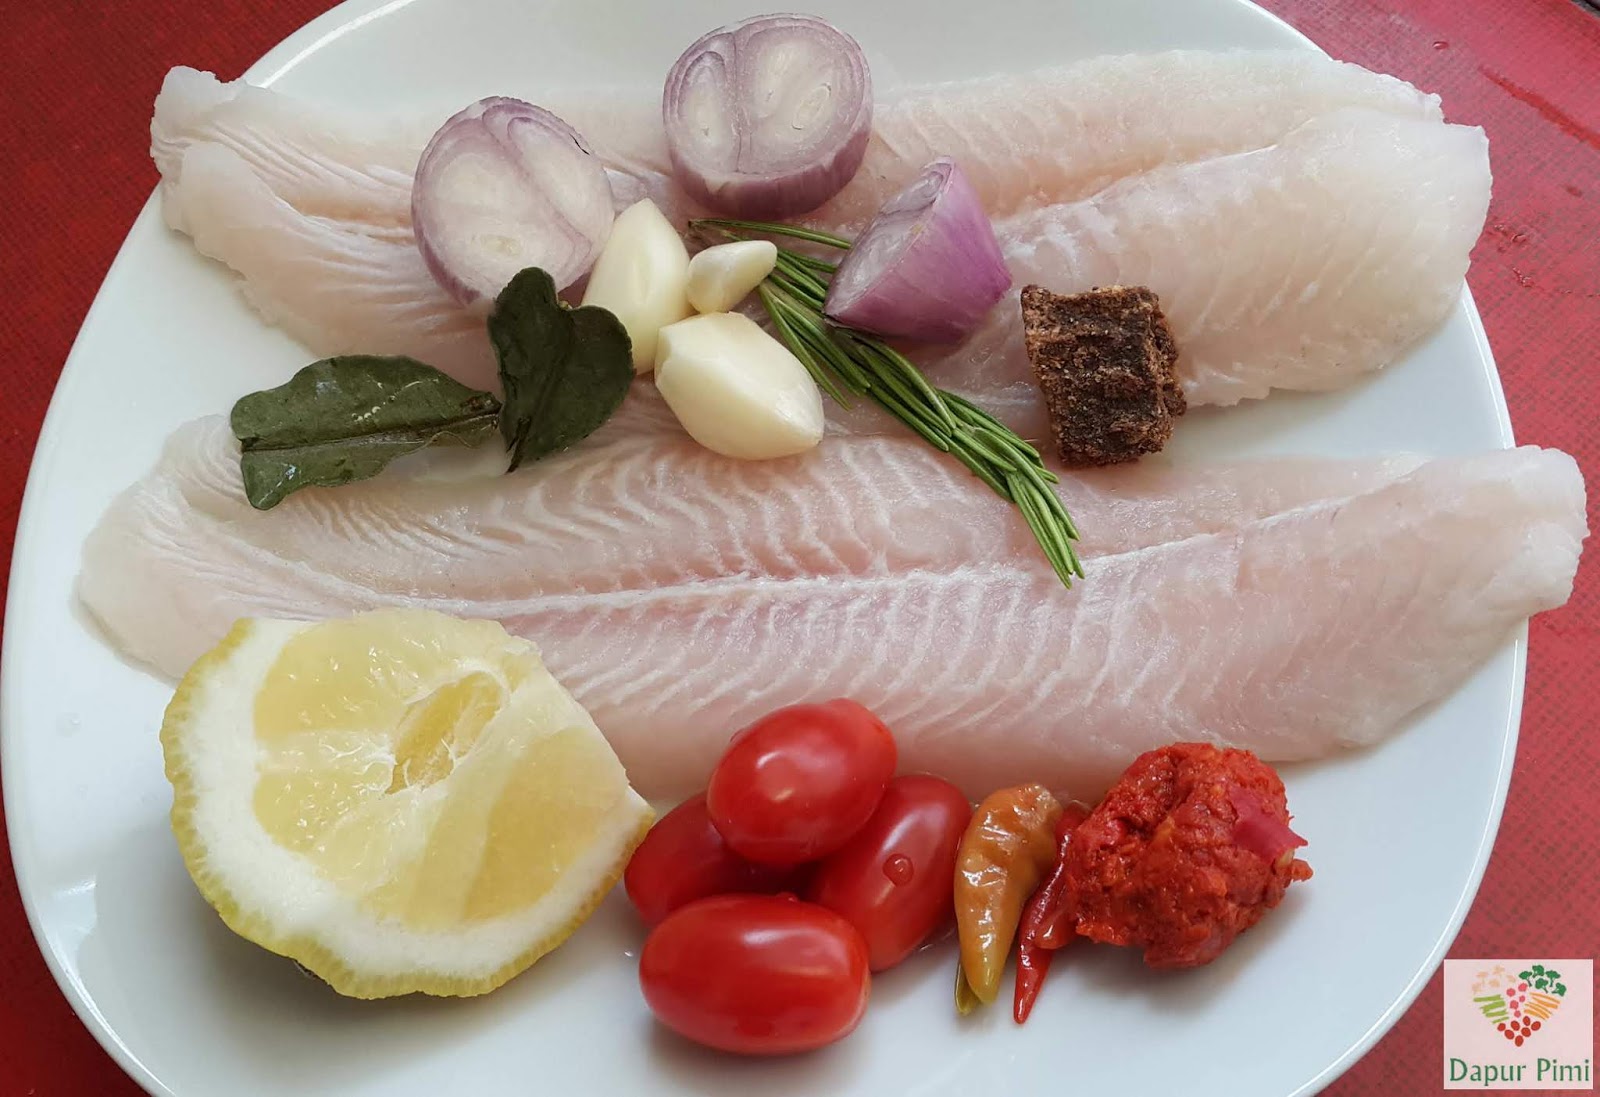 Dapur Pimi: Ikan sambal terasi